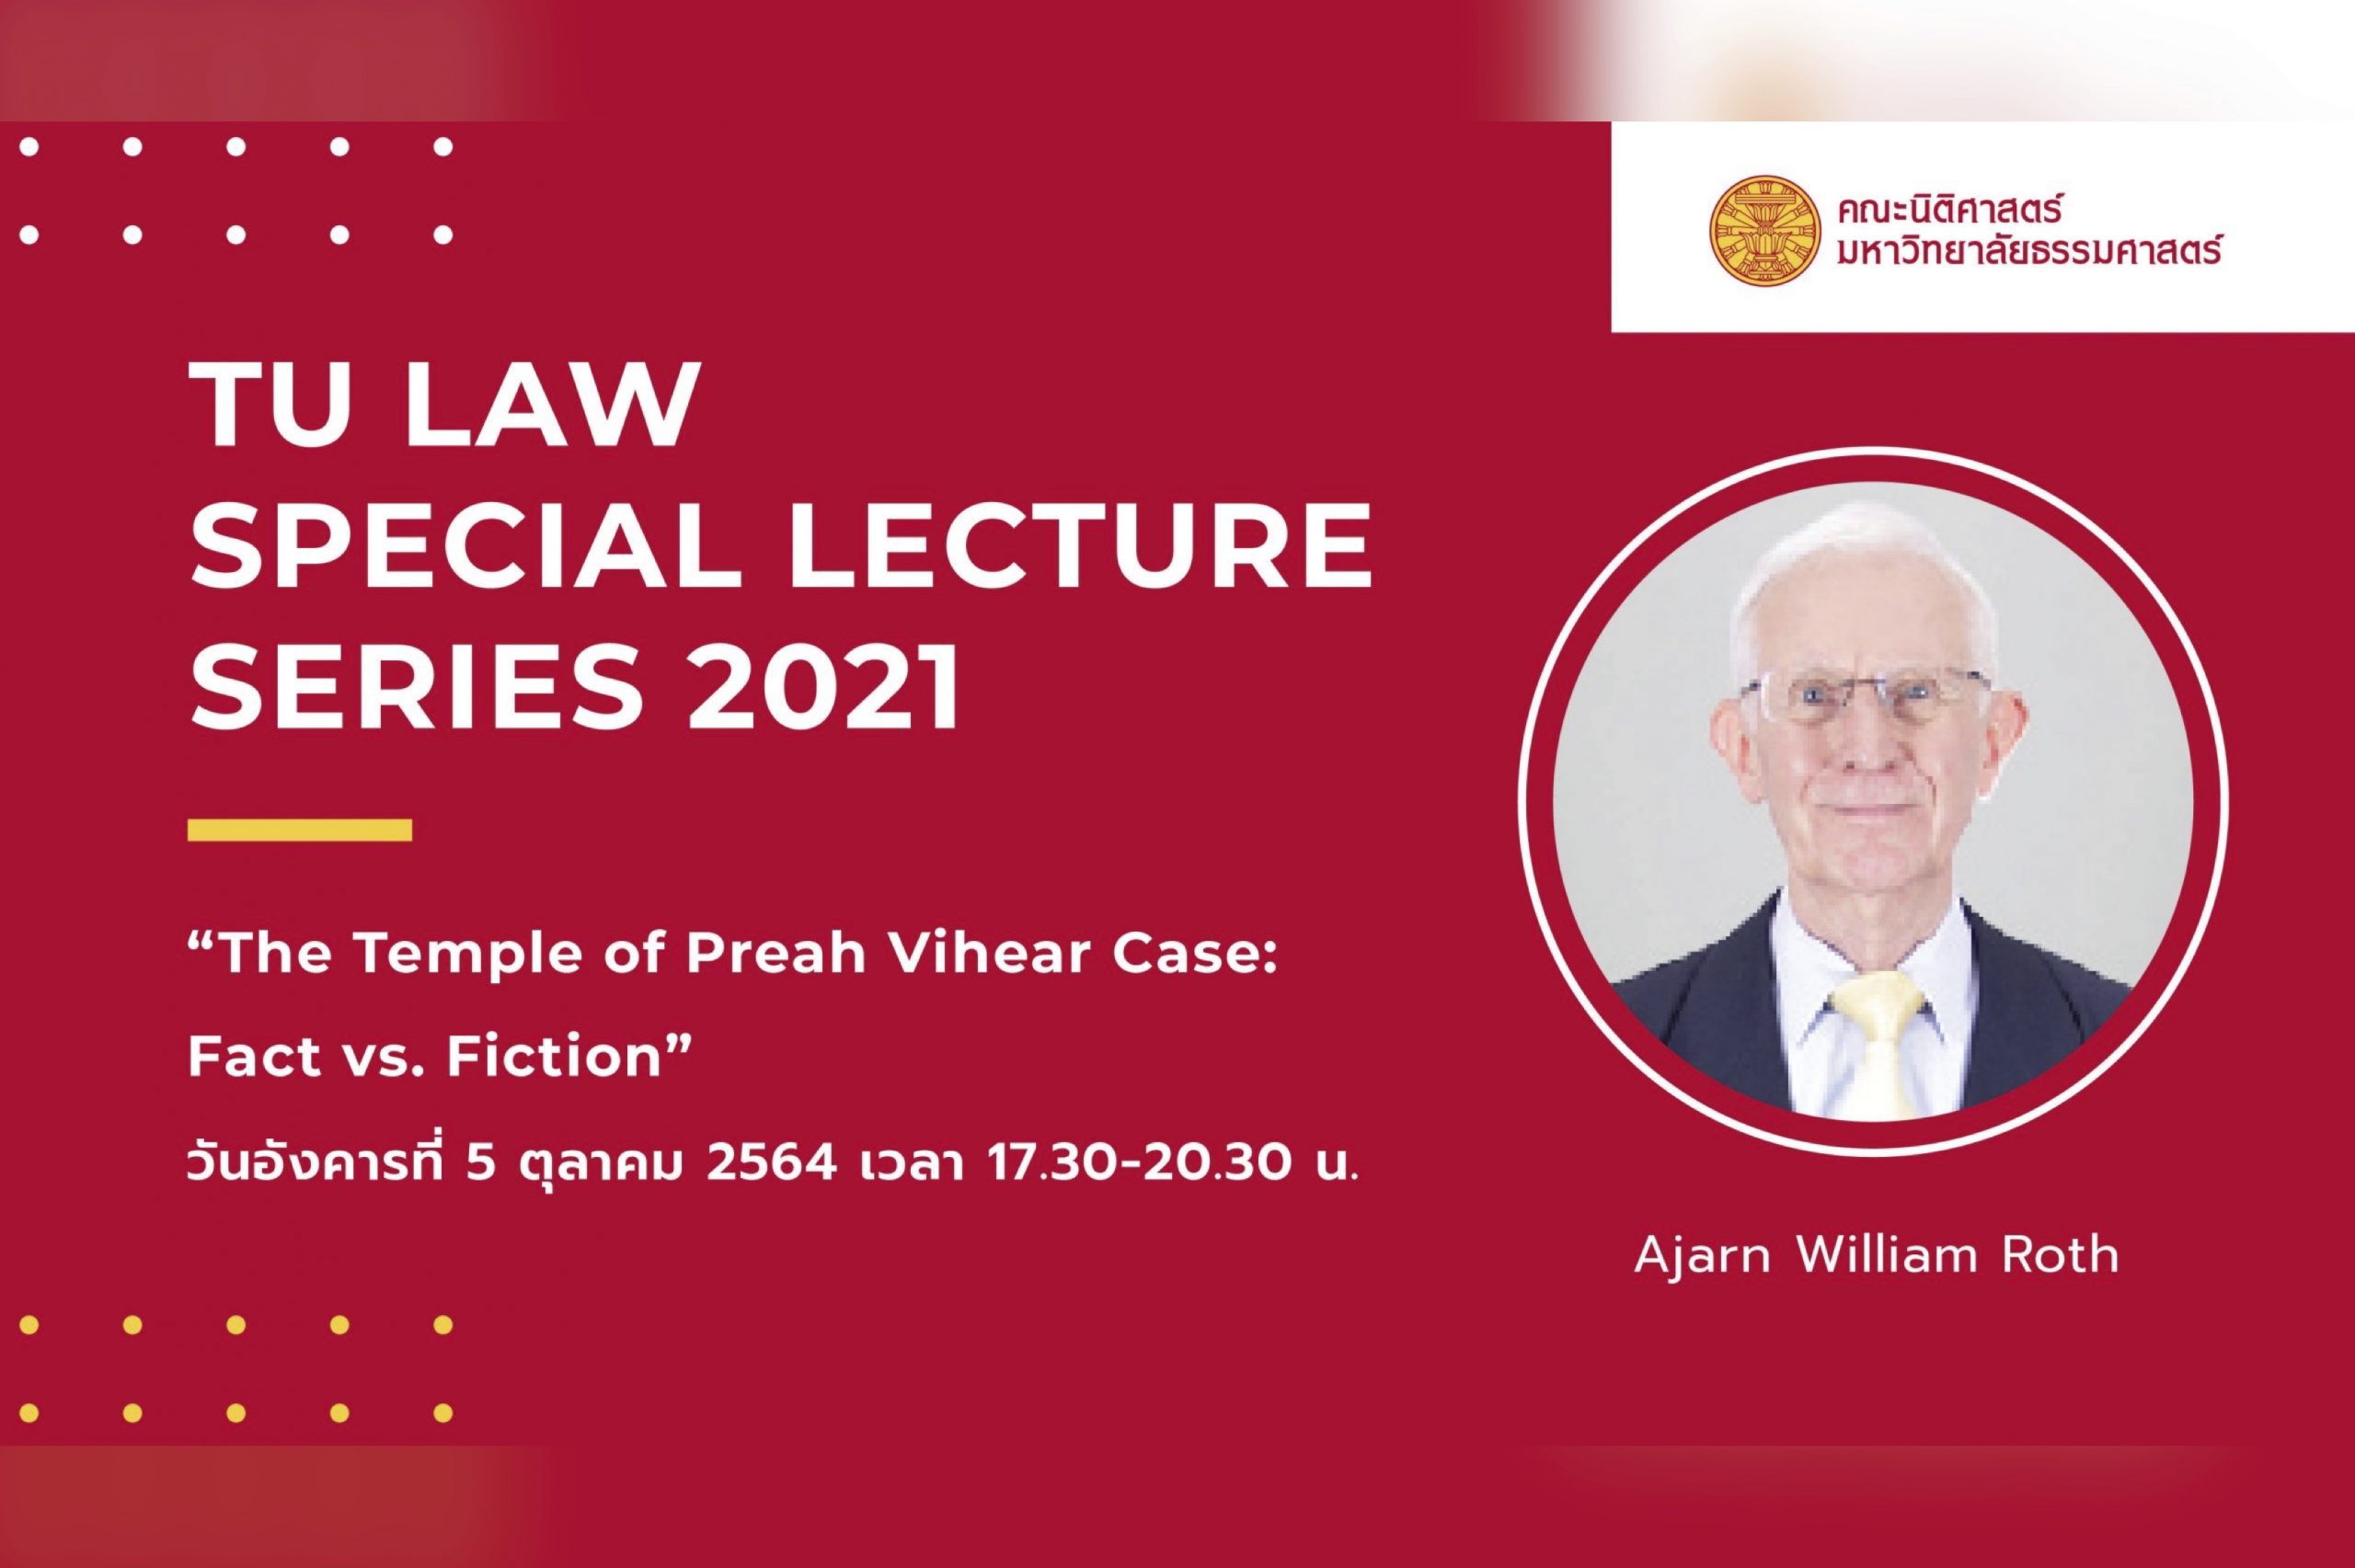 TU Law Special Lecture Series 2021 วันอังคารที่ 5 ตุลาคม 2564 เวลา 17.30-20.30 น. หัวข้อ “The Temple of Preah Vihear Case: Fact vs. Fiction” โดย Ajarn William Roth